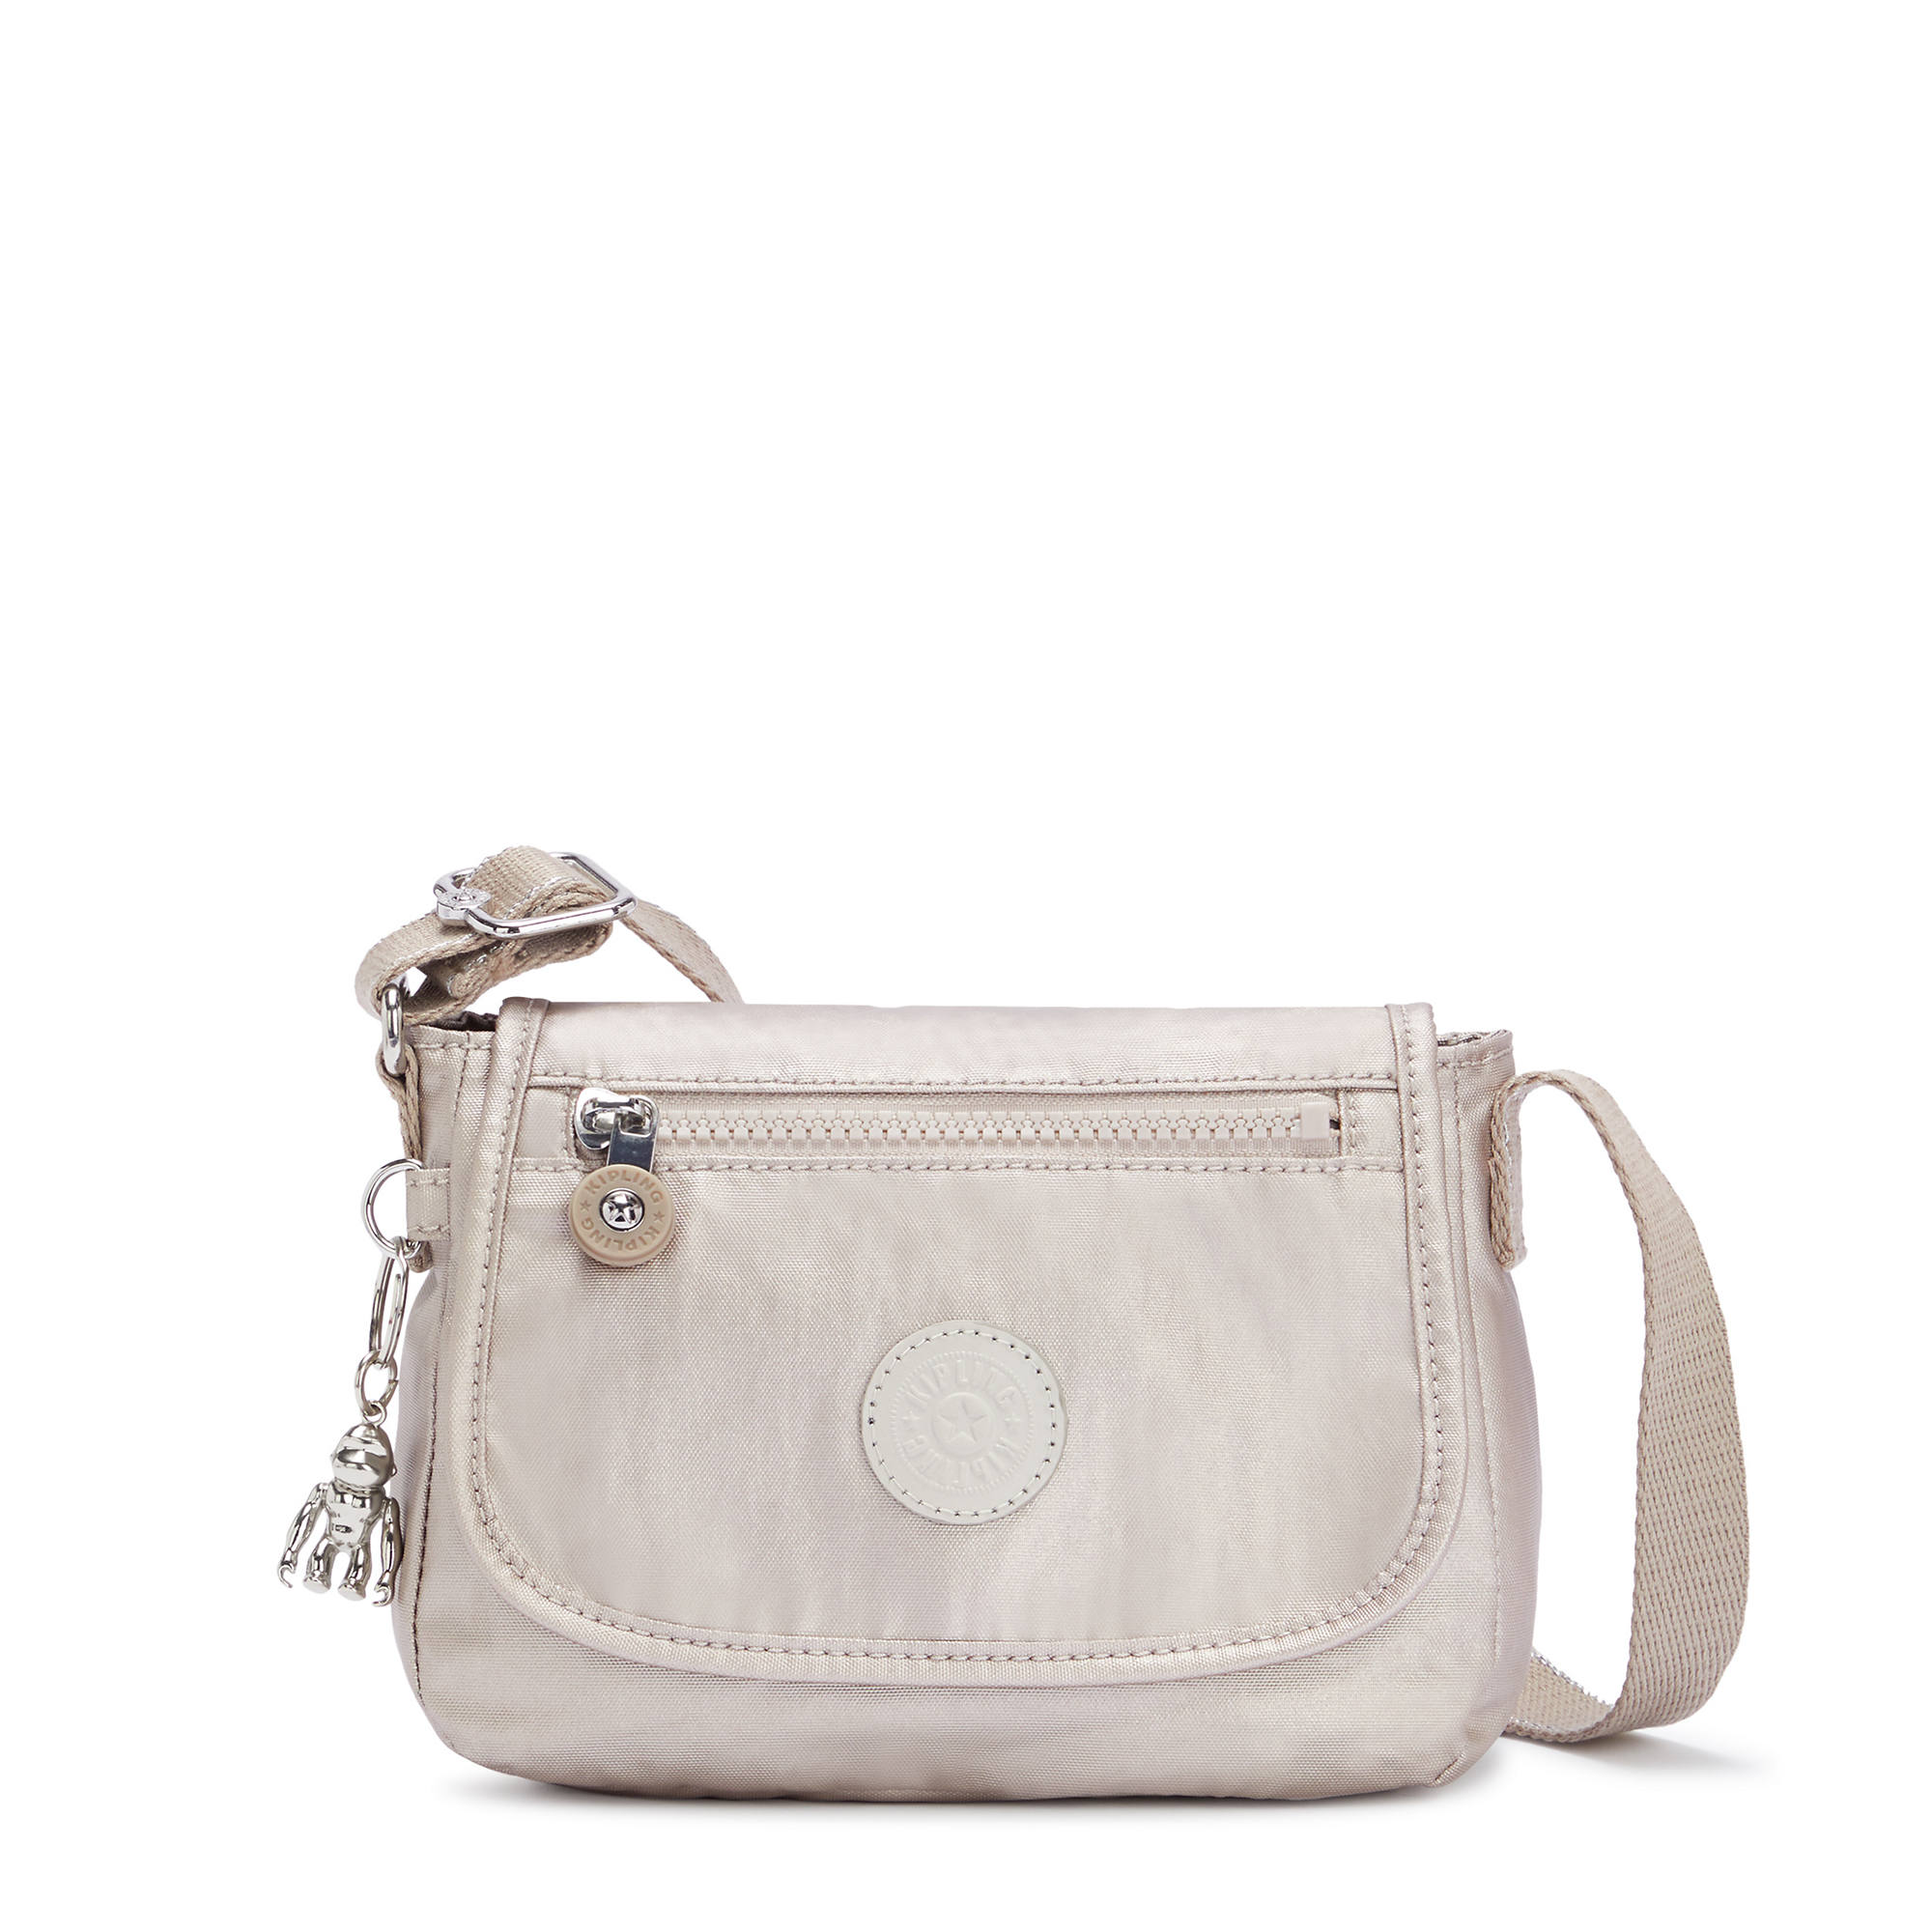 Kipling Women's Tally Minibag, Lightweight Crossbody Mini, Nylon Phone Bag